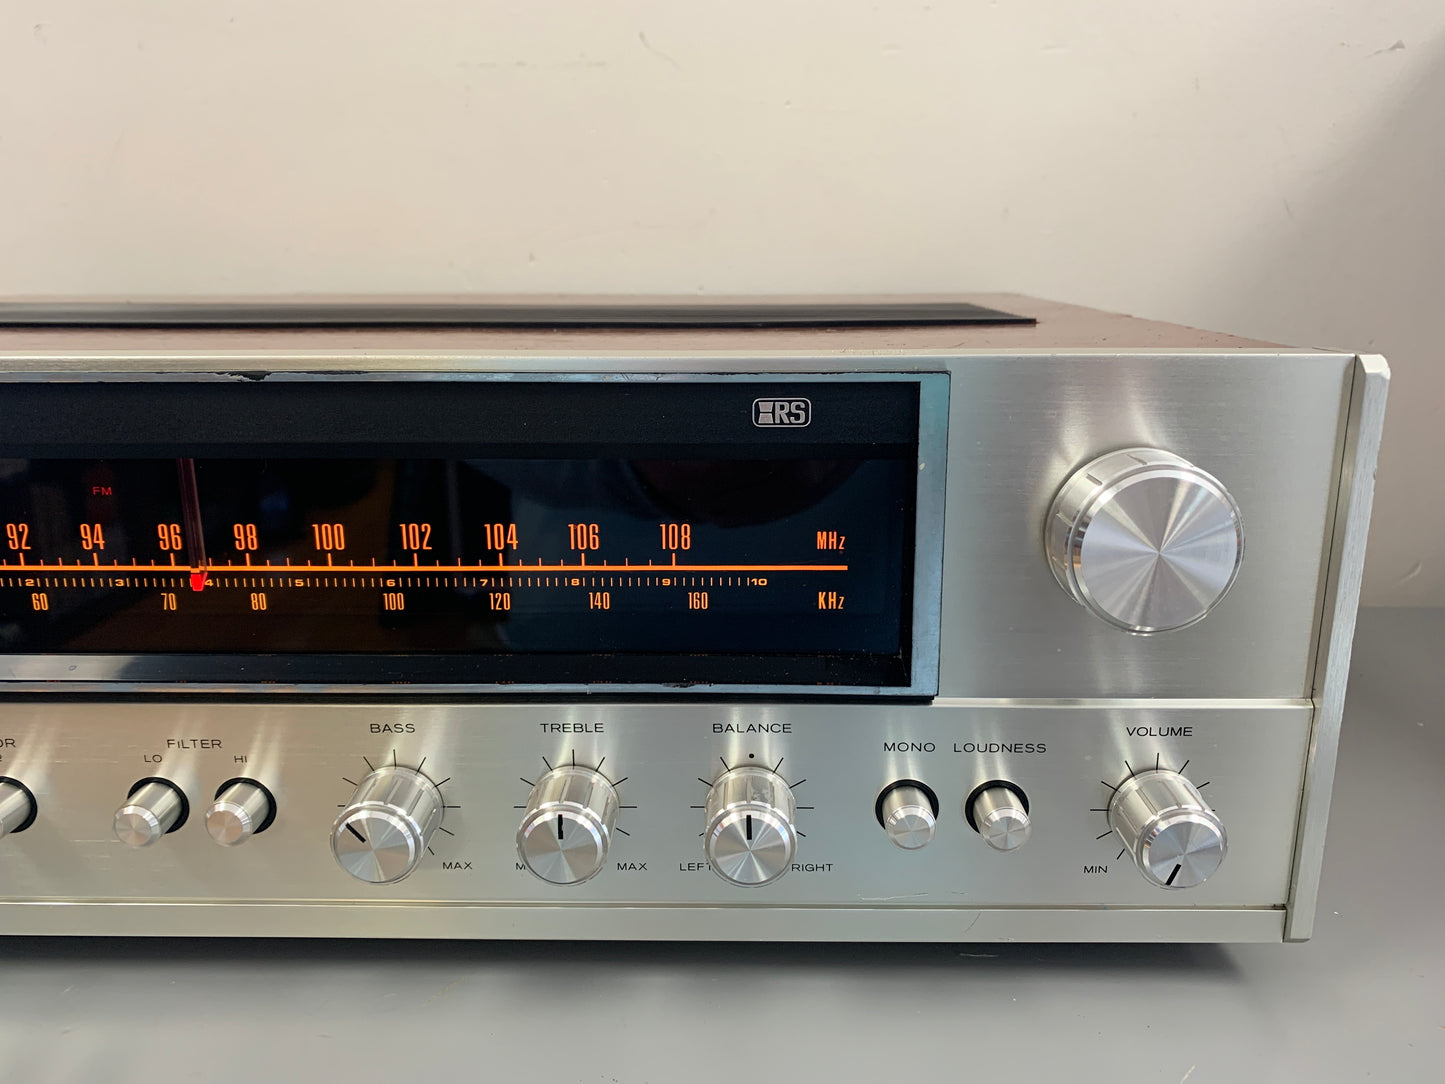 Realistic STA-90 Stereo Receiver * 45W * 1978